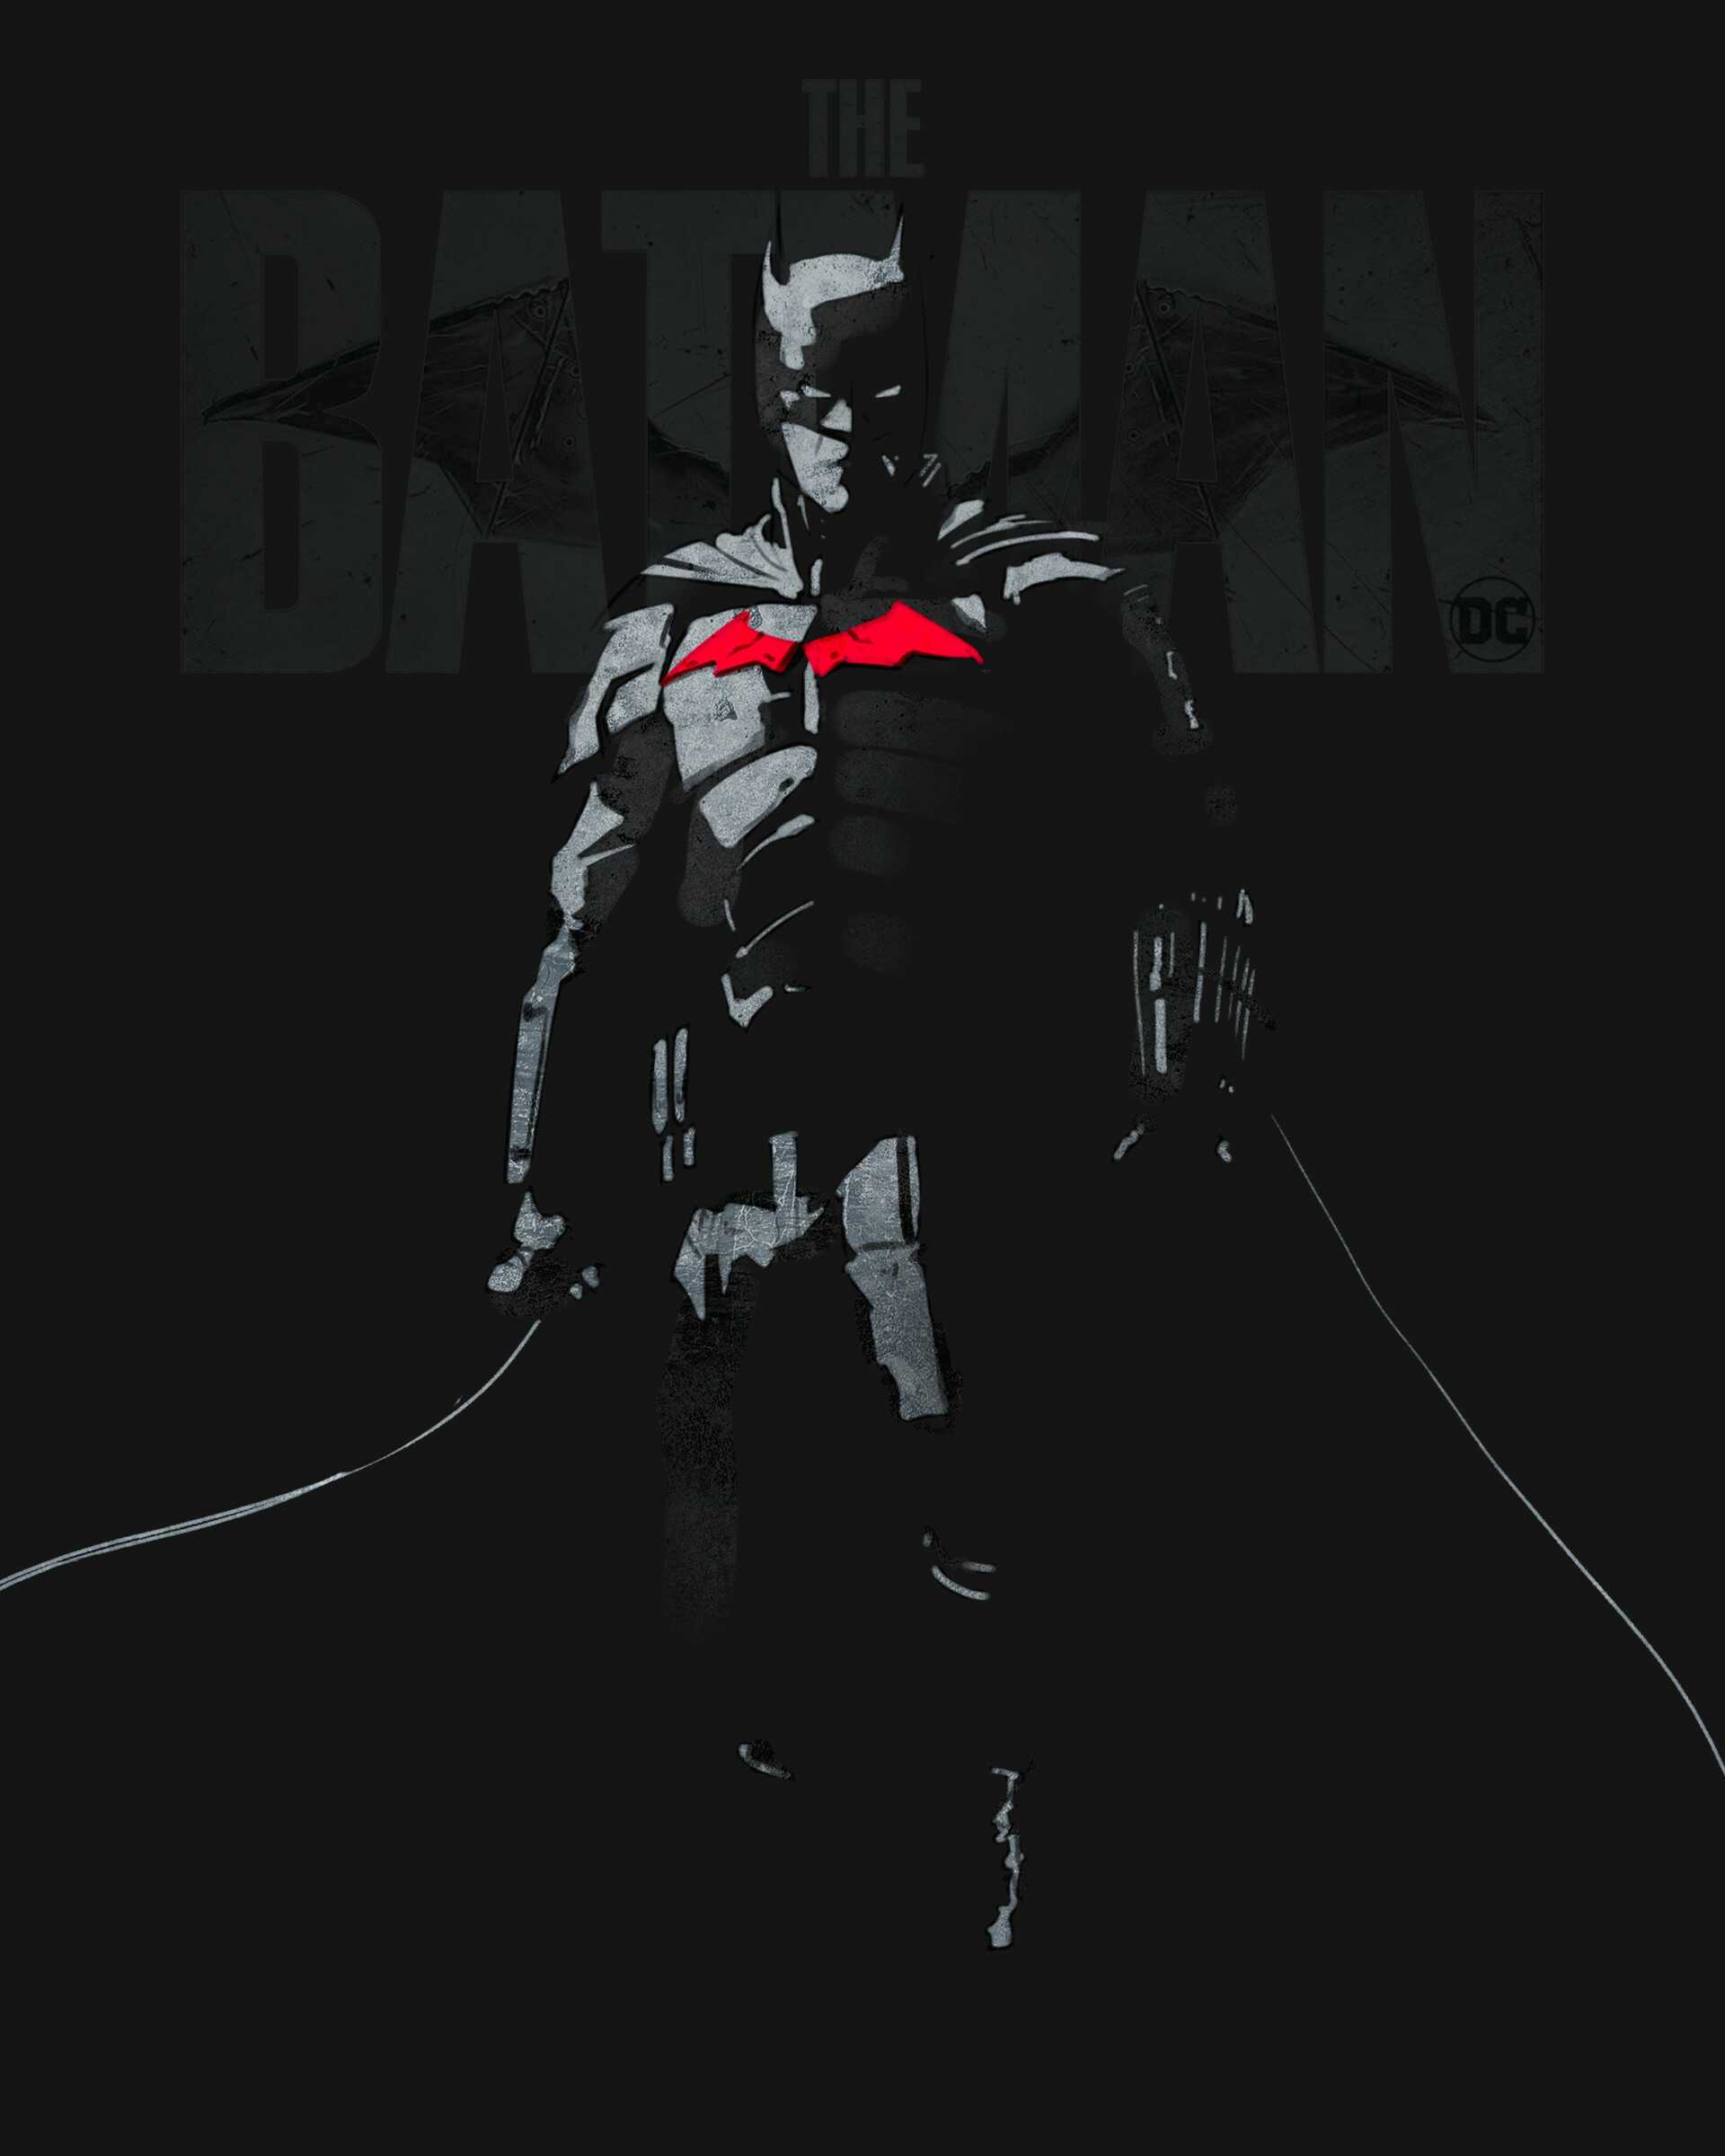 batman logo wallpaper for android